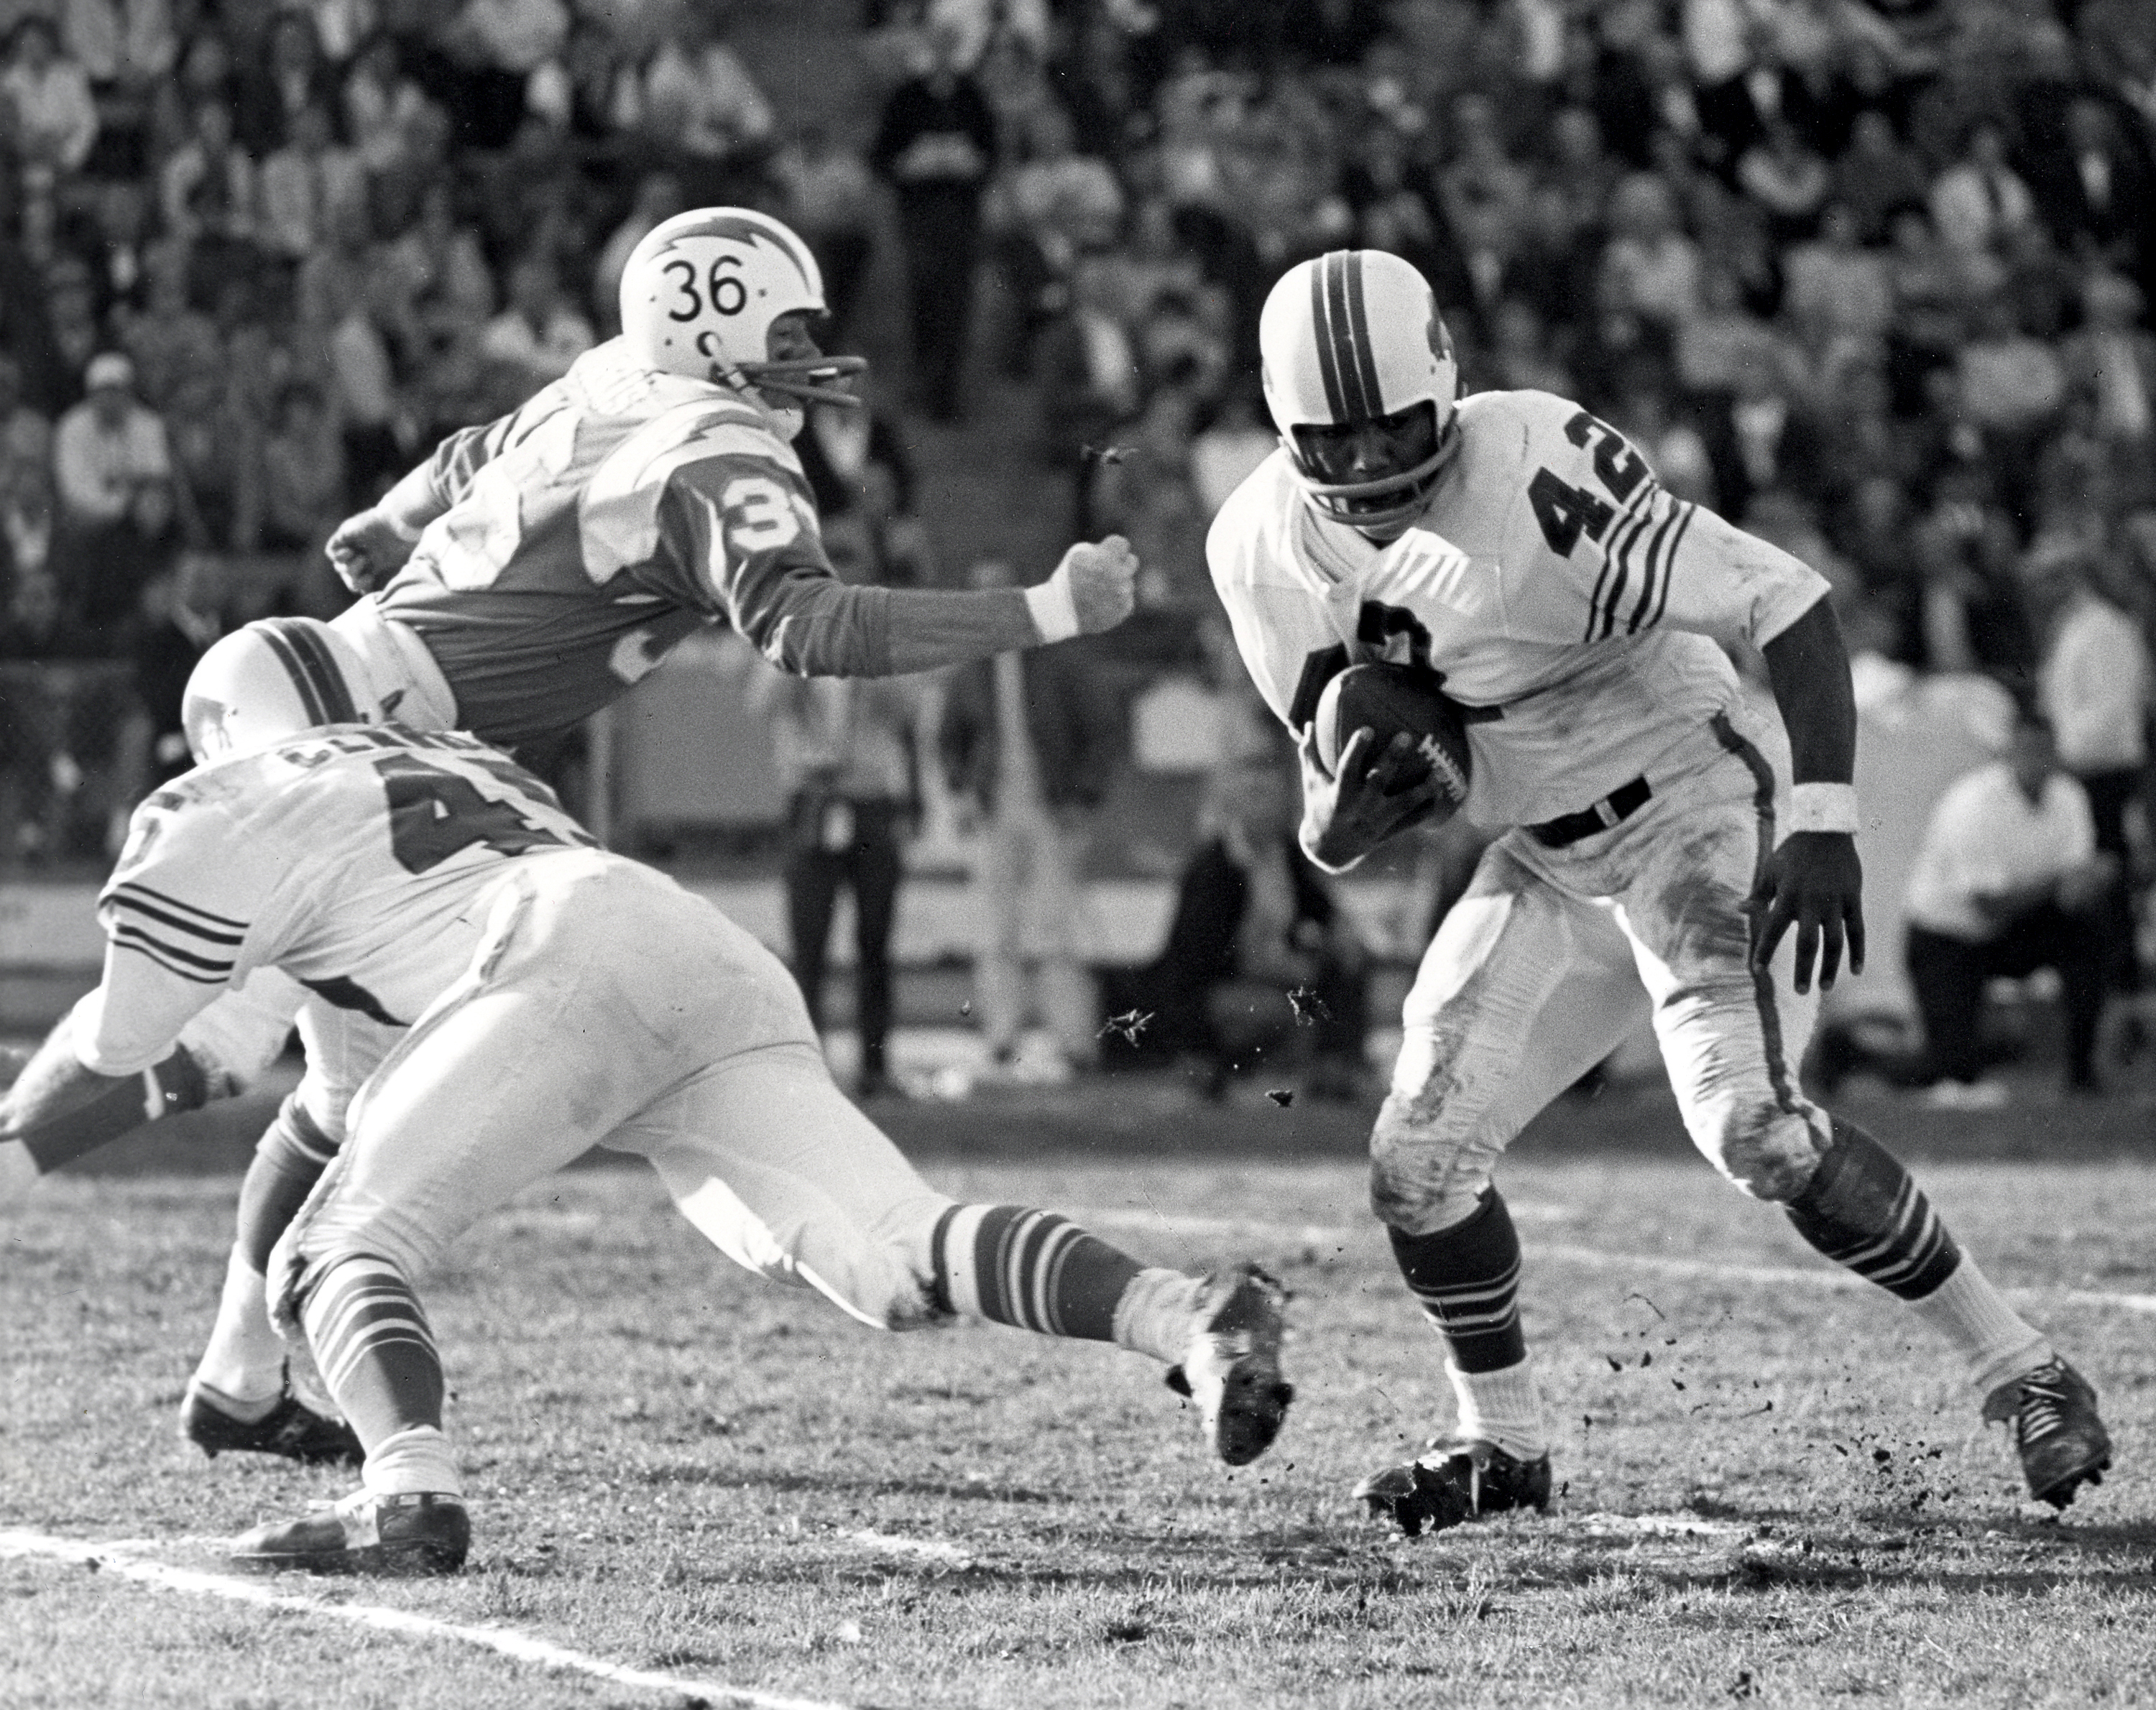 1965 AFL Championship Game - Buffalo Bills vs San Diego Chargers - December 26, 1965